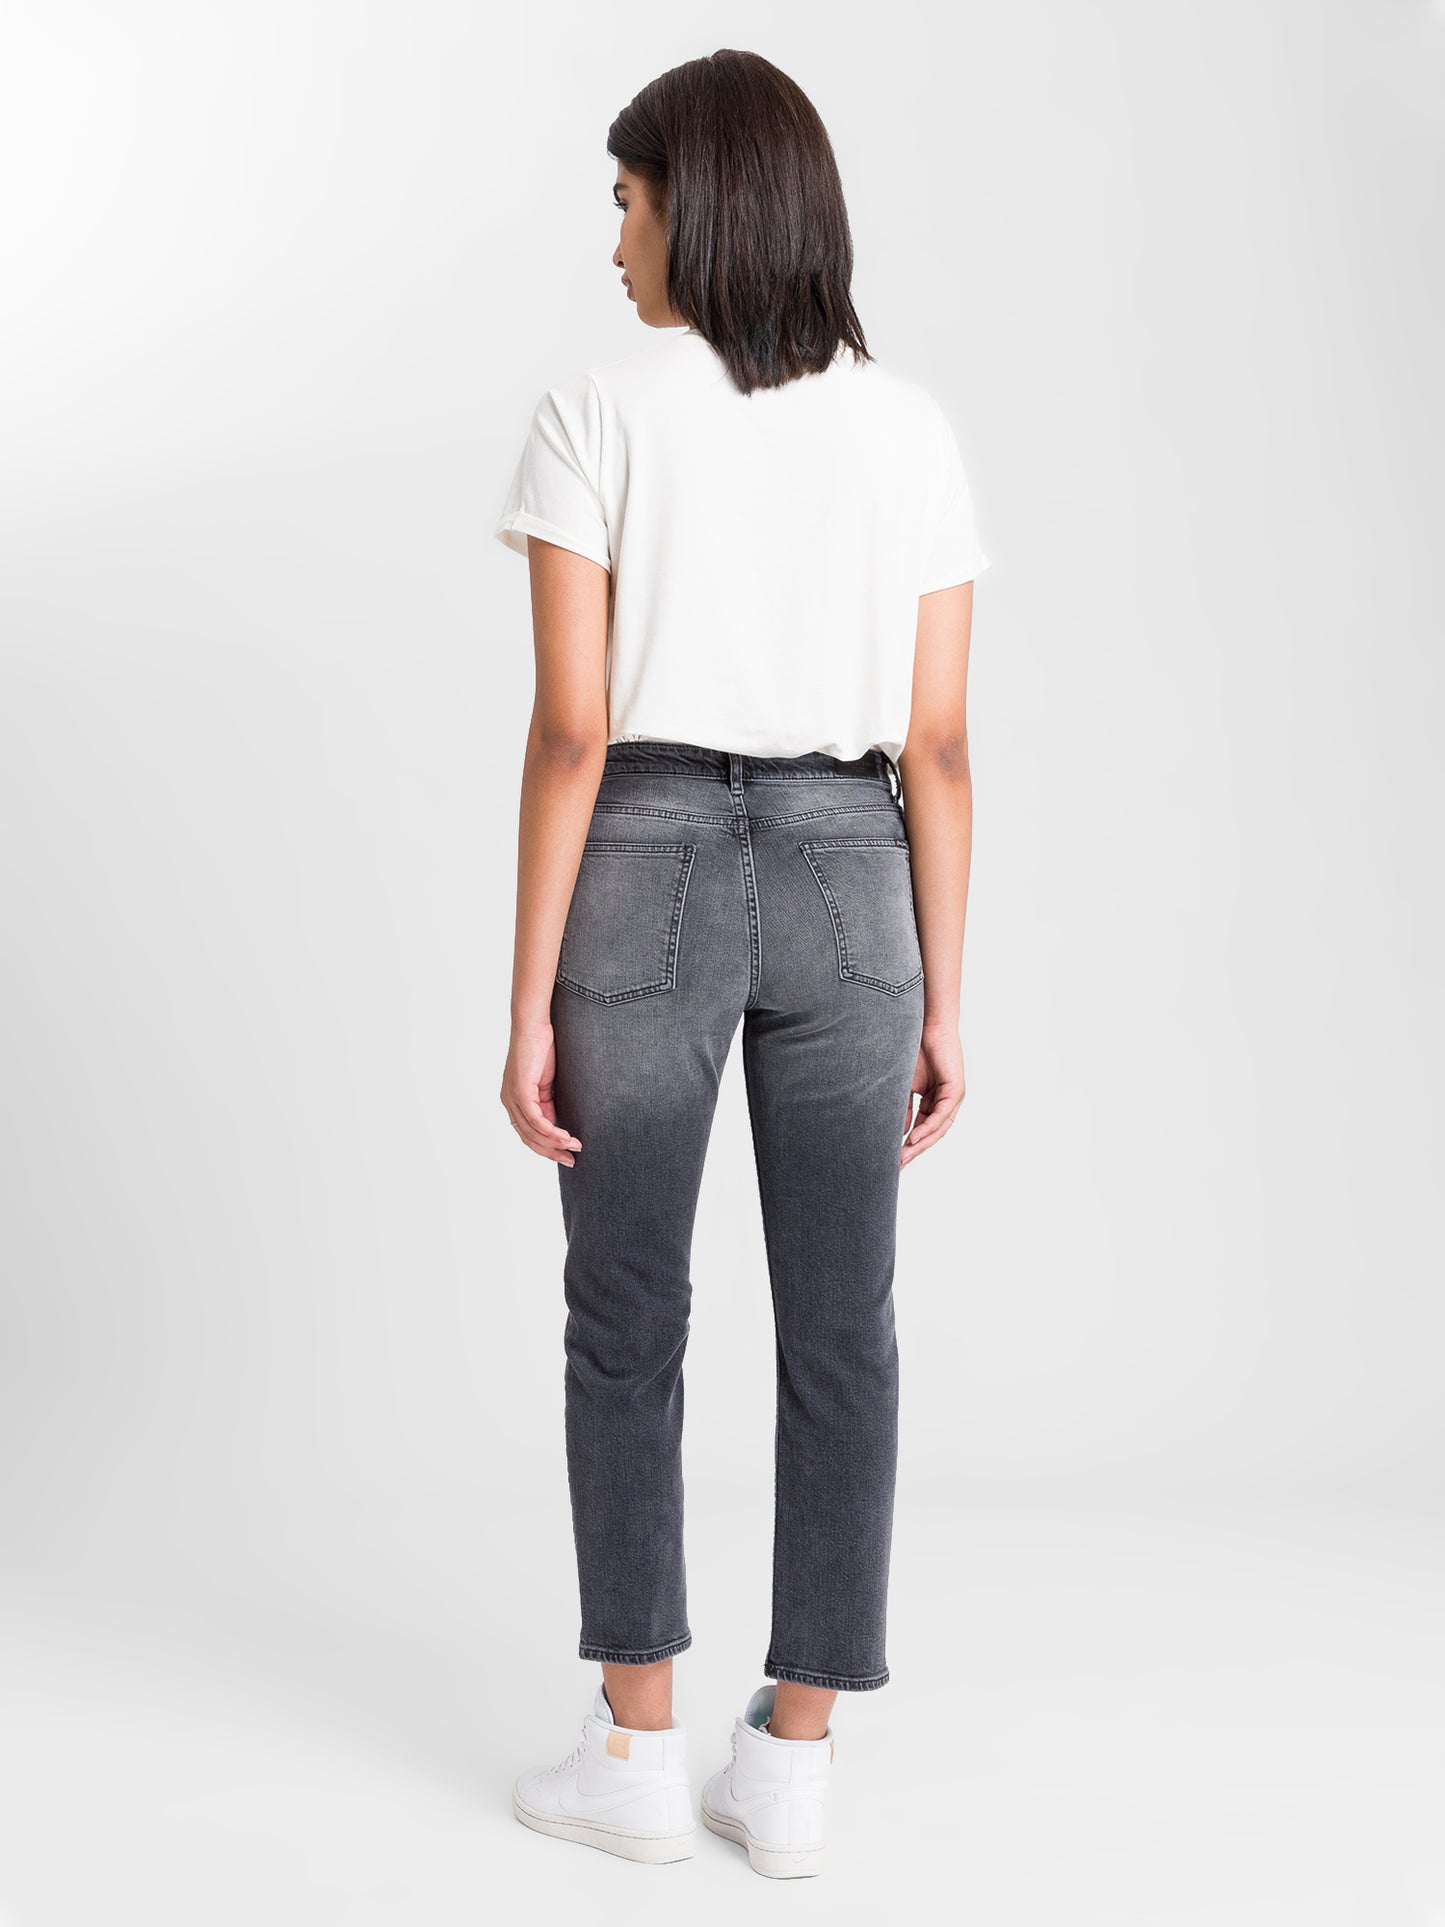 Marisa women's jeans regular fit high waist straight leg black